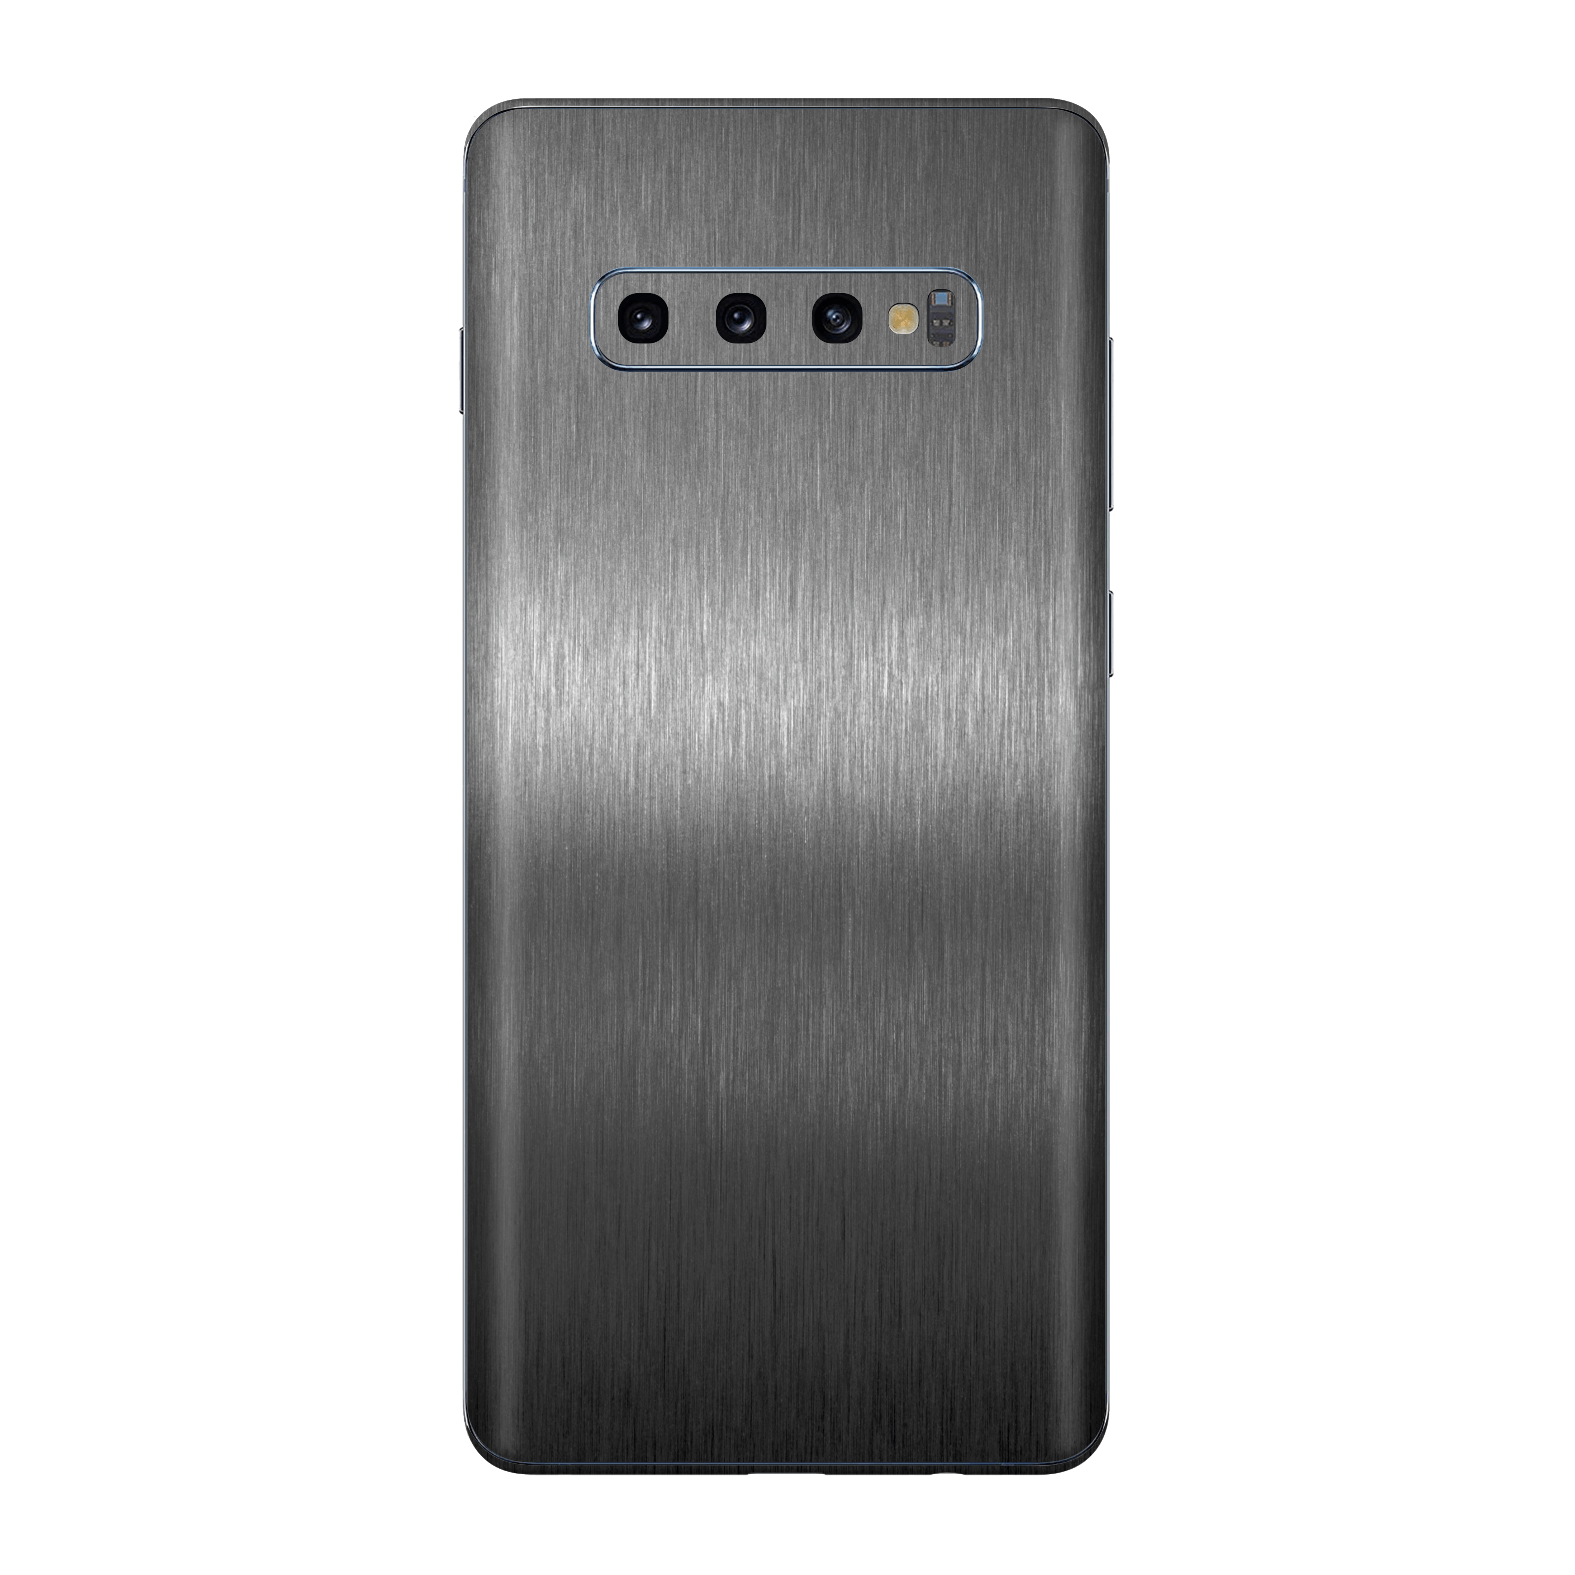 Samsung Galaxy S10 Brushed Metal Titanium Metallic Skin Wrap Sticker Decal Cover Protector by EasySkinz | EasySkinz.com